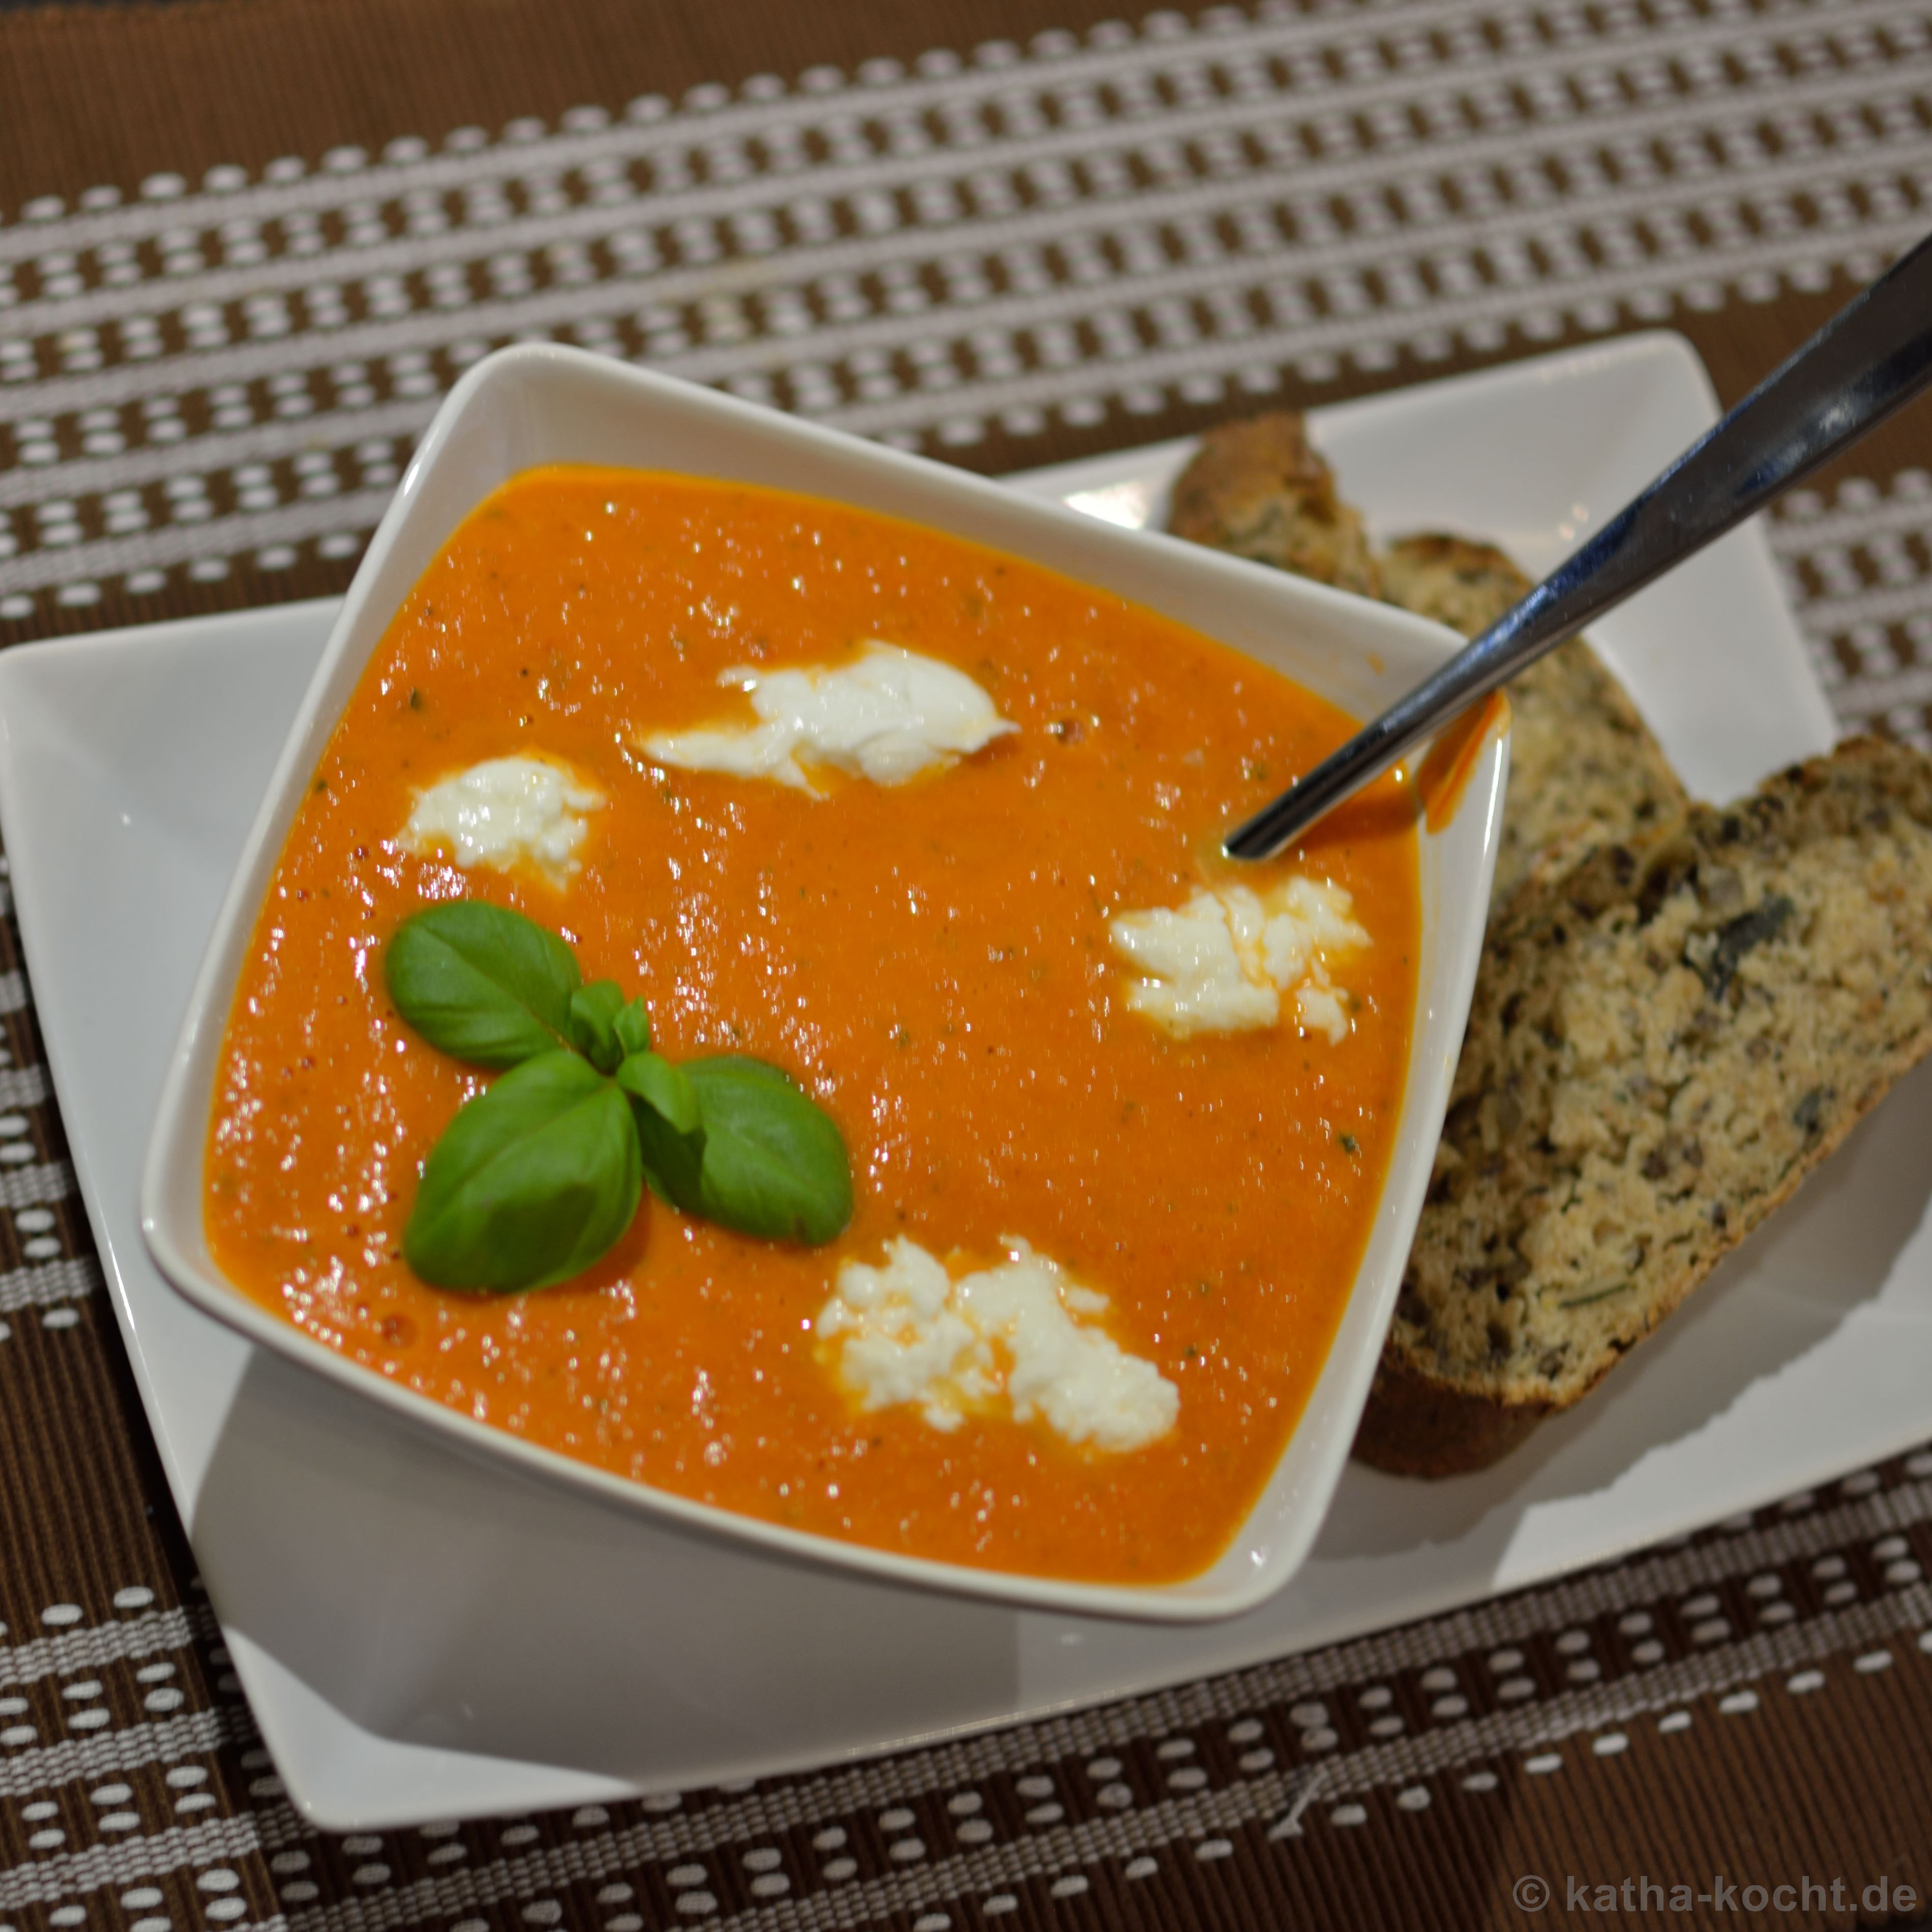 Tomaten-Paprika Suppe mit Büffelmozzarella - Katha-kocht!